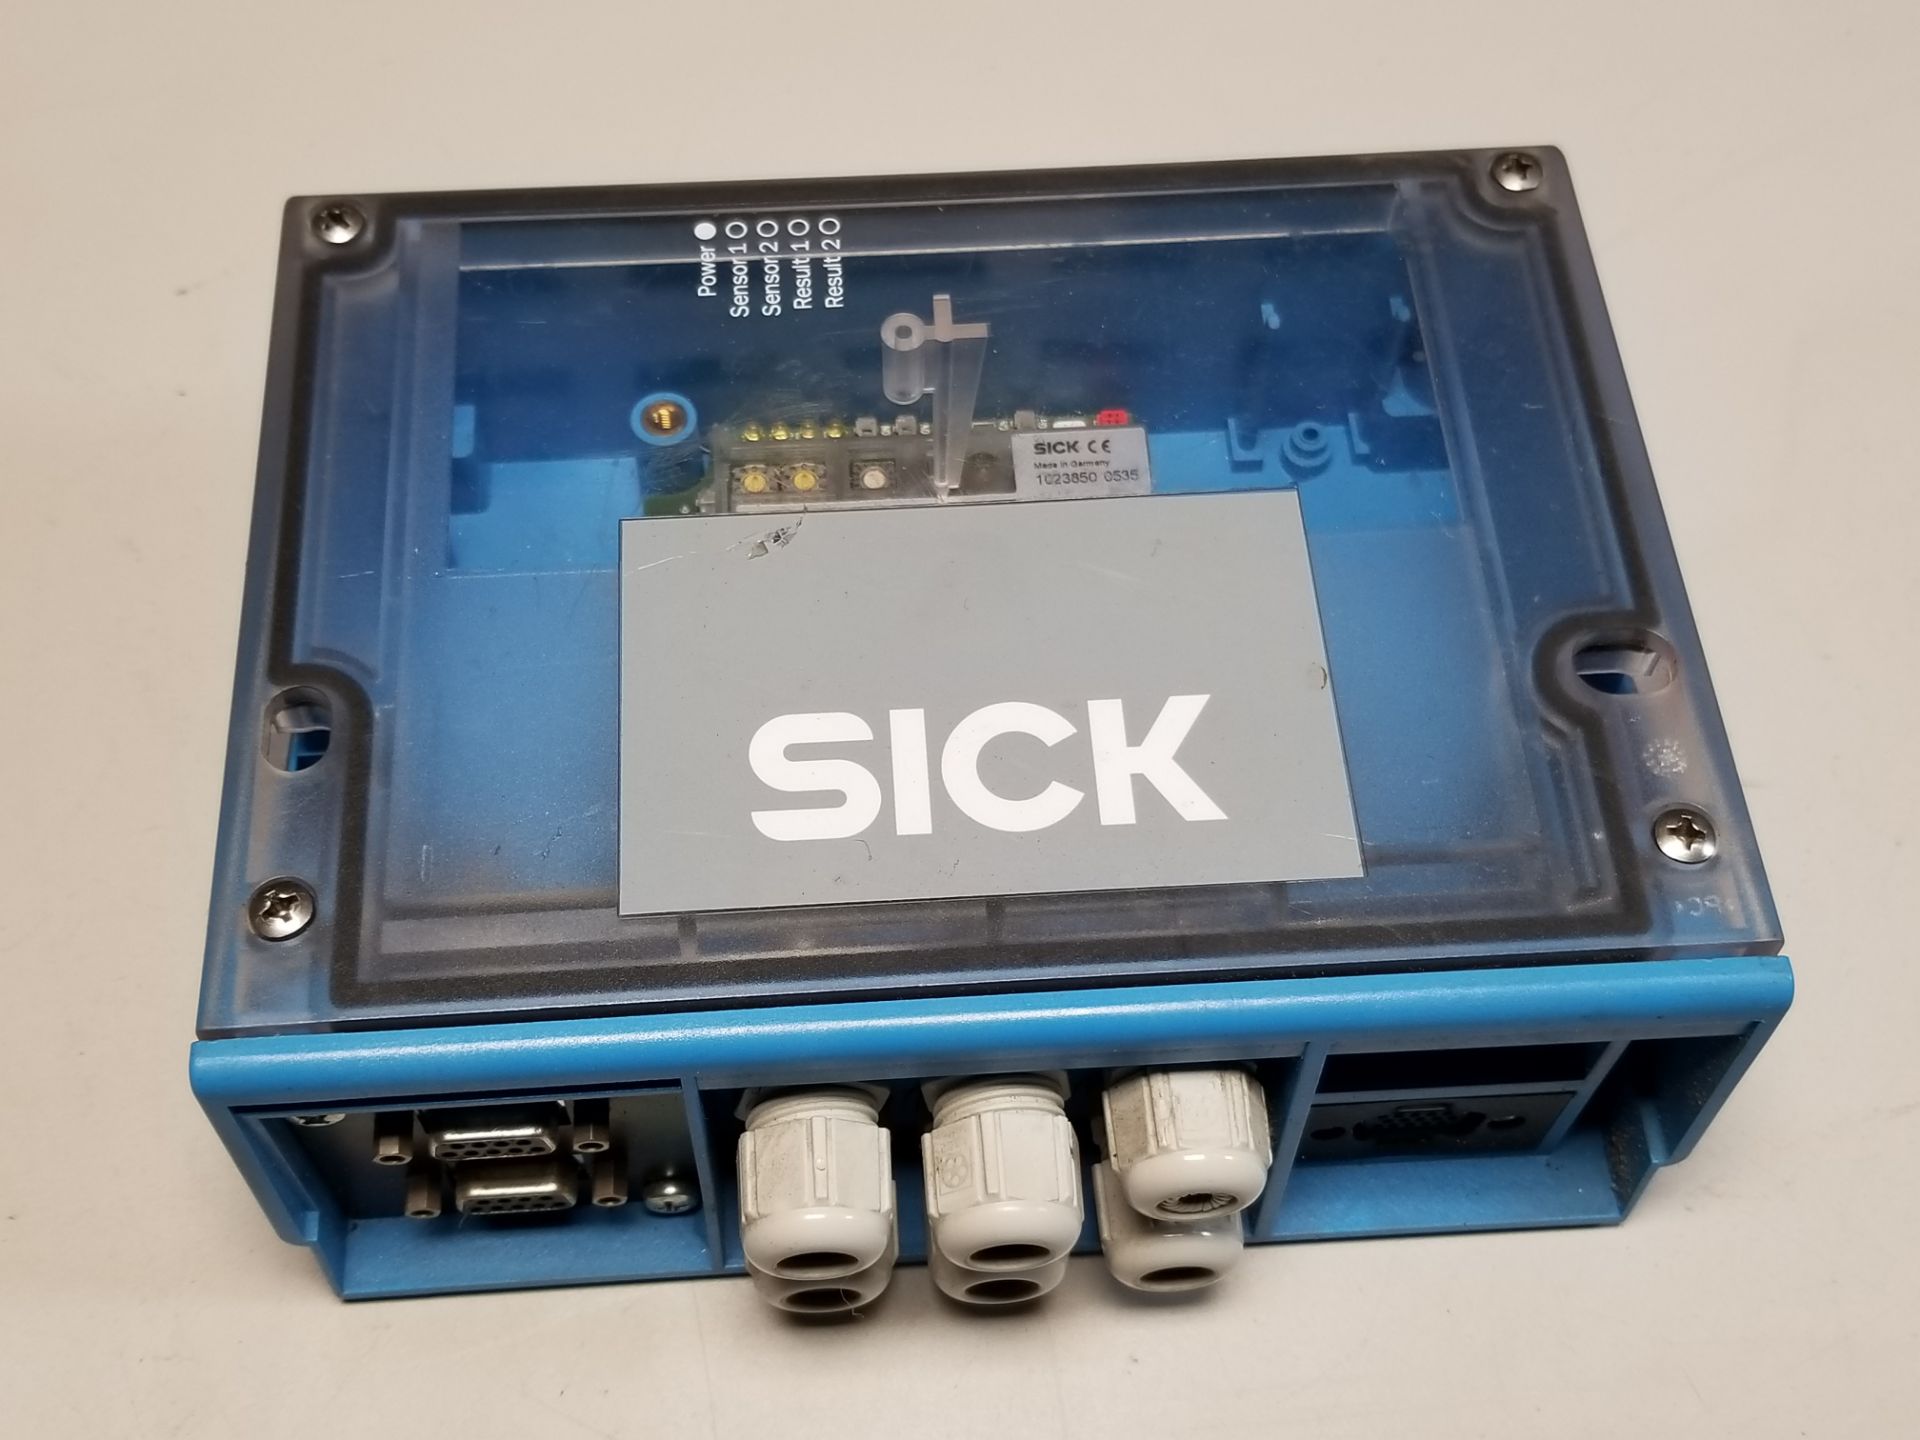 Sick Proximity Sensor Connection Module & Cloning Interface